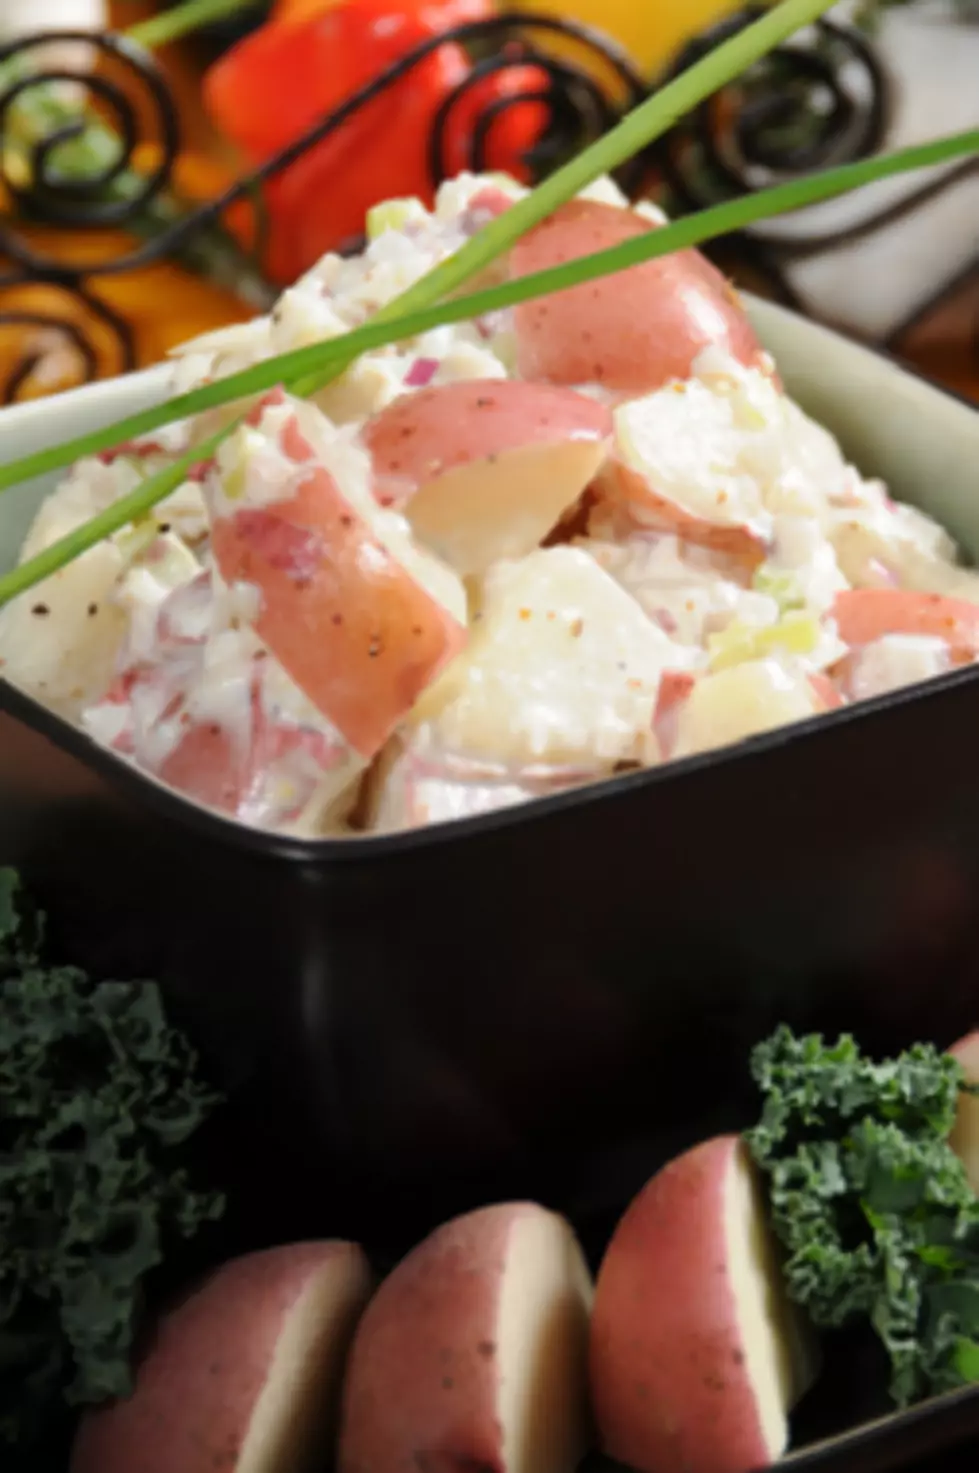 Big Joe shares Nana’s Homemade Potato Salad